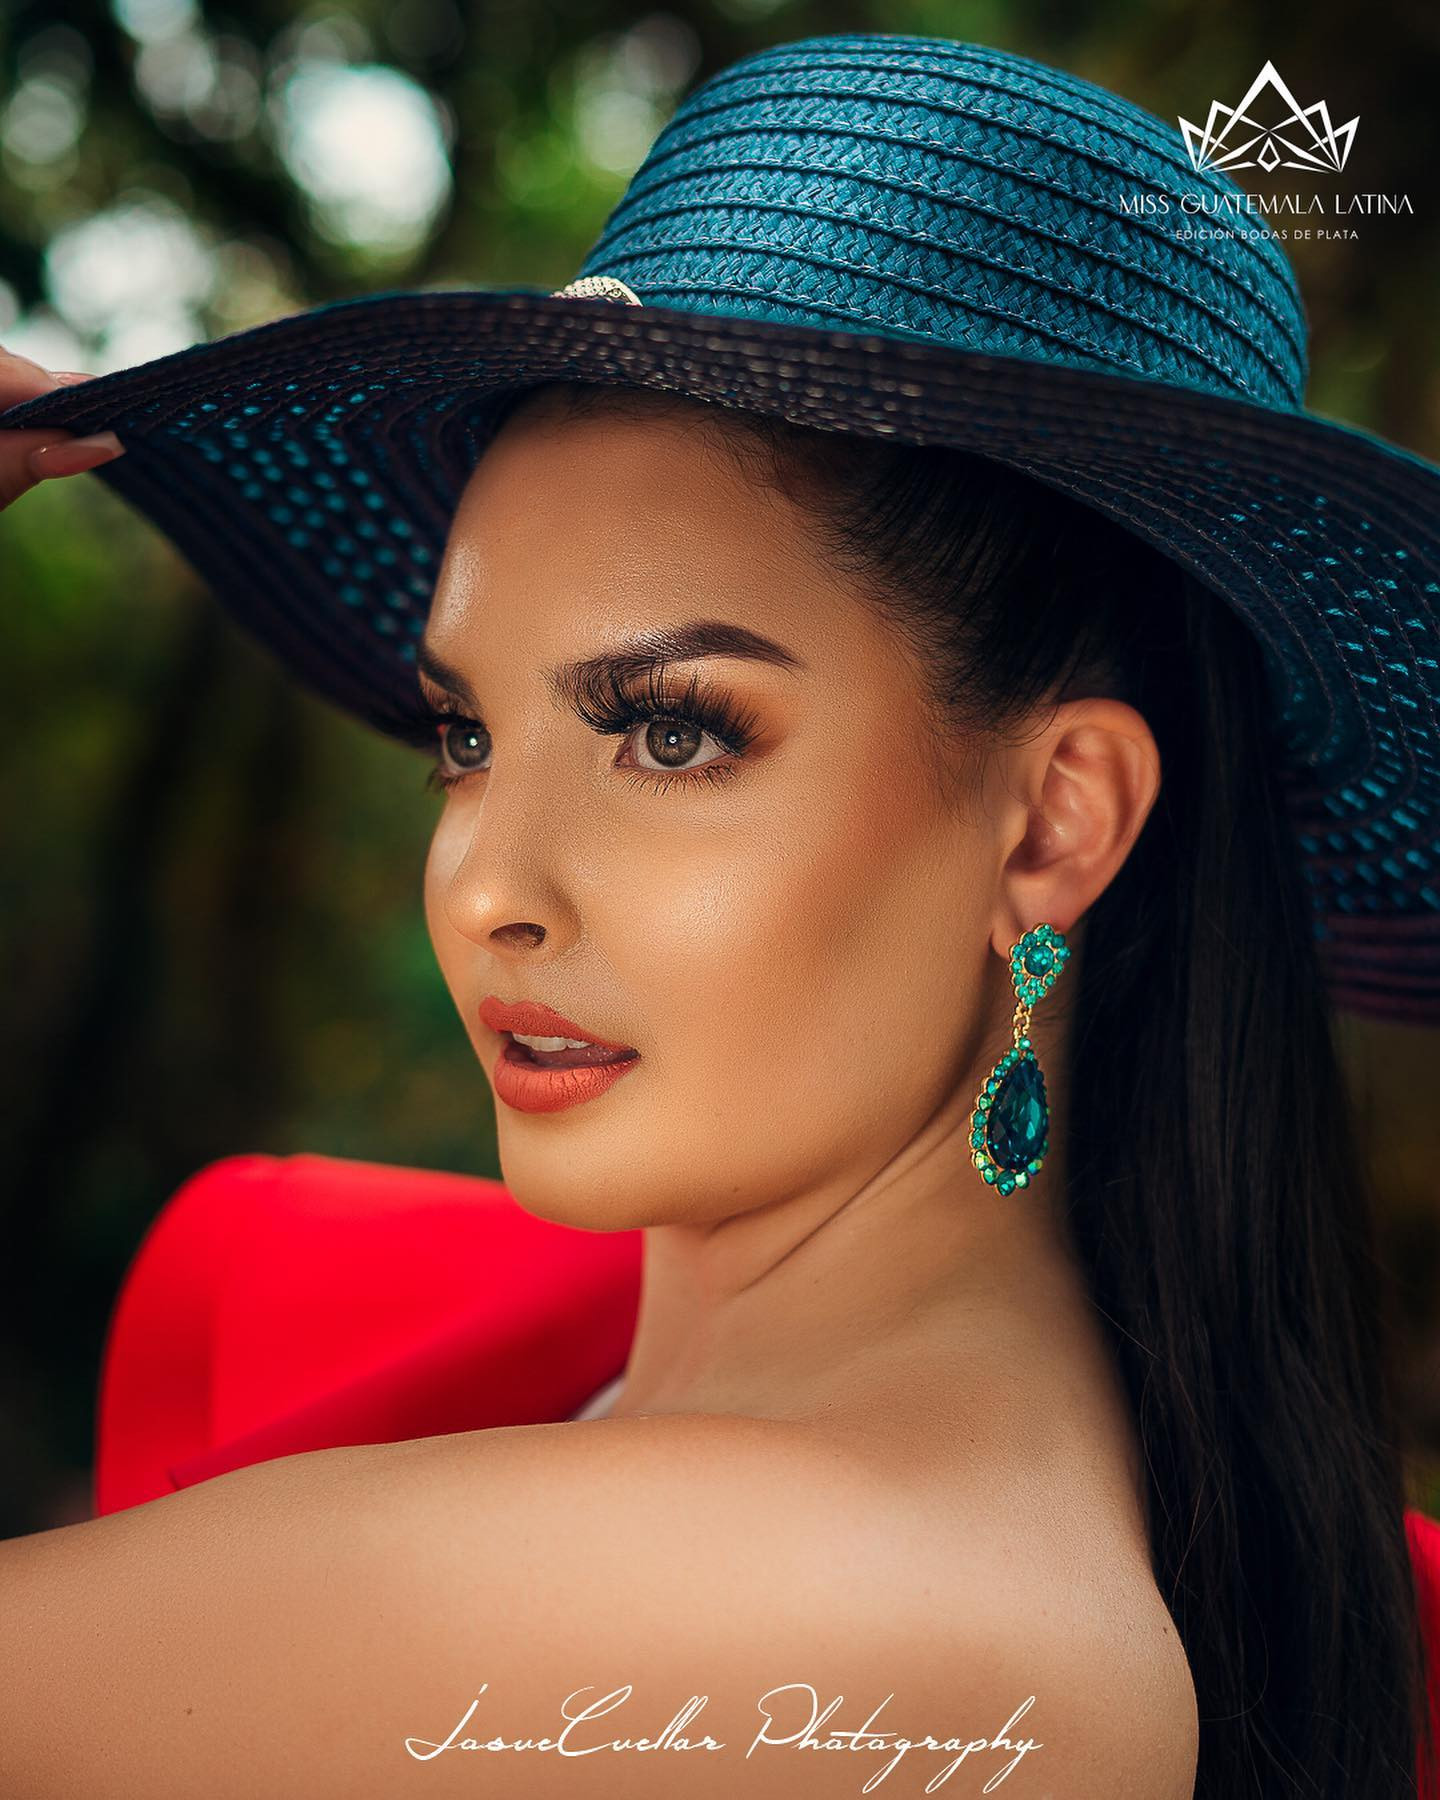 guatemala - candidatas a miss guatemala latina 2021. final: 30 de abril. - Página 8 BFwFOg